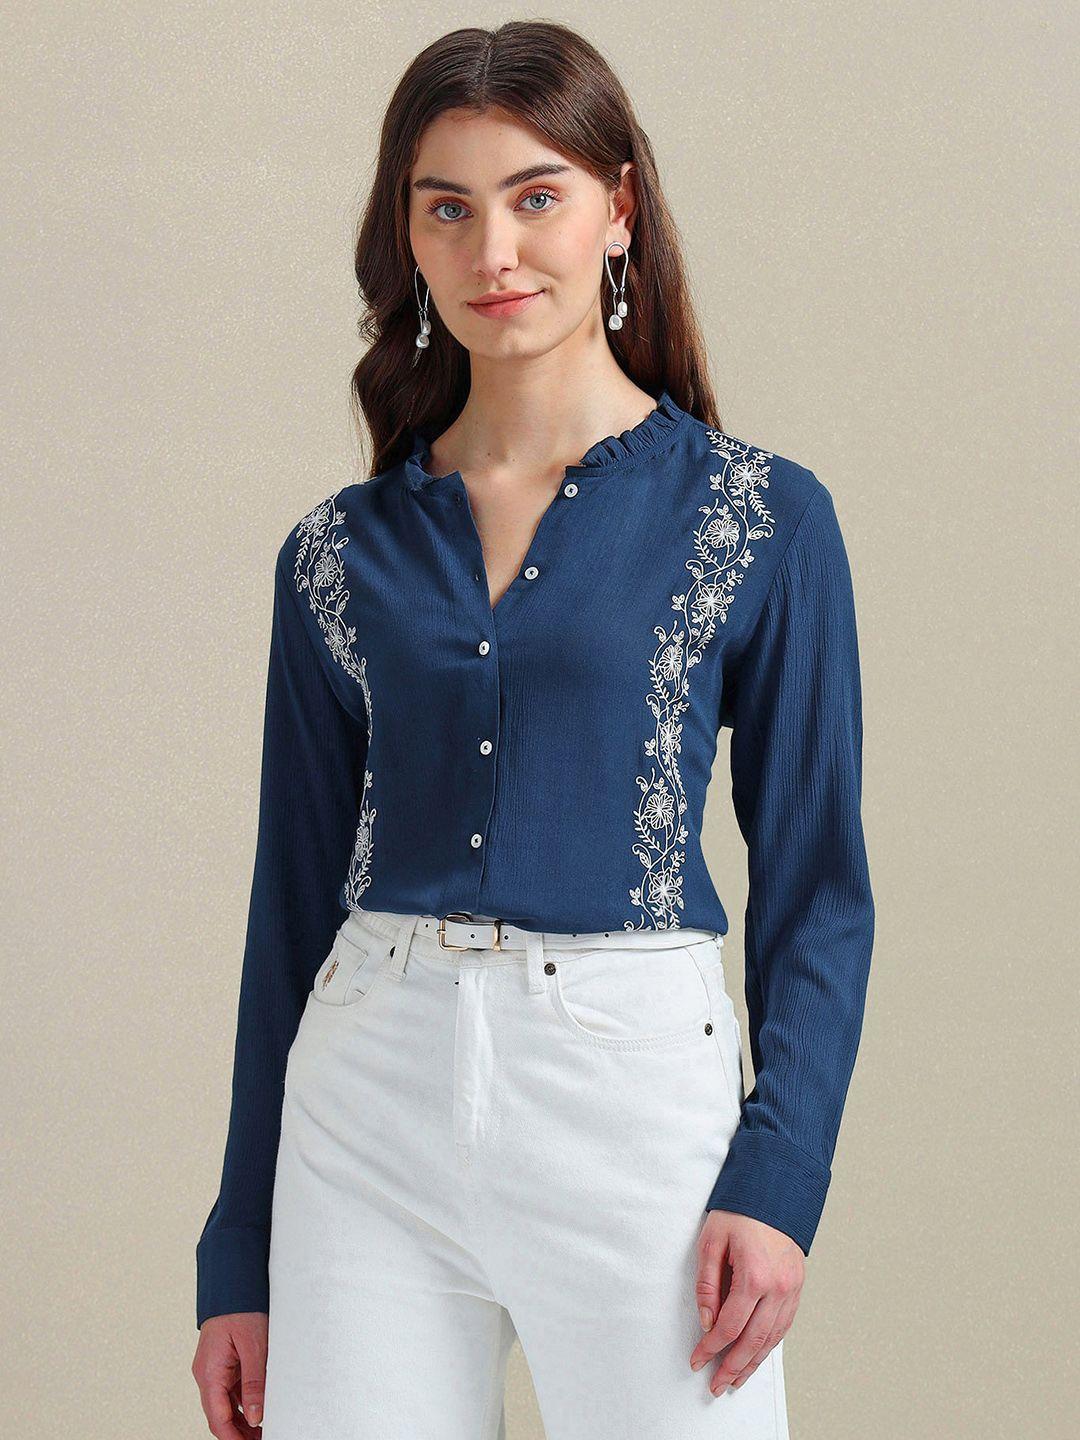 u.s. polo assn. women floral embroidered mandarin collar crepe shirt style top